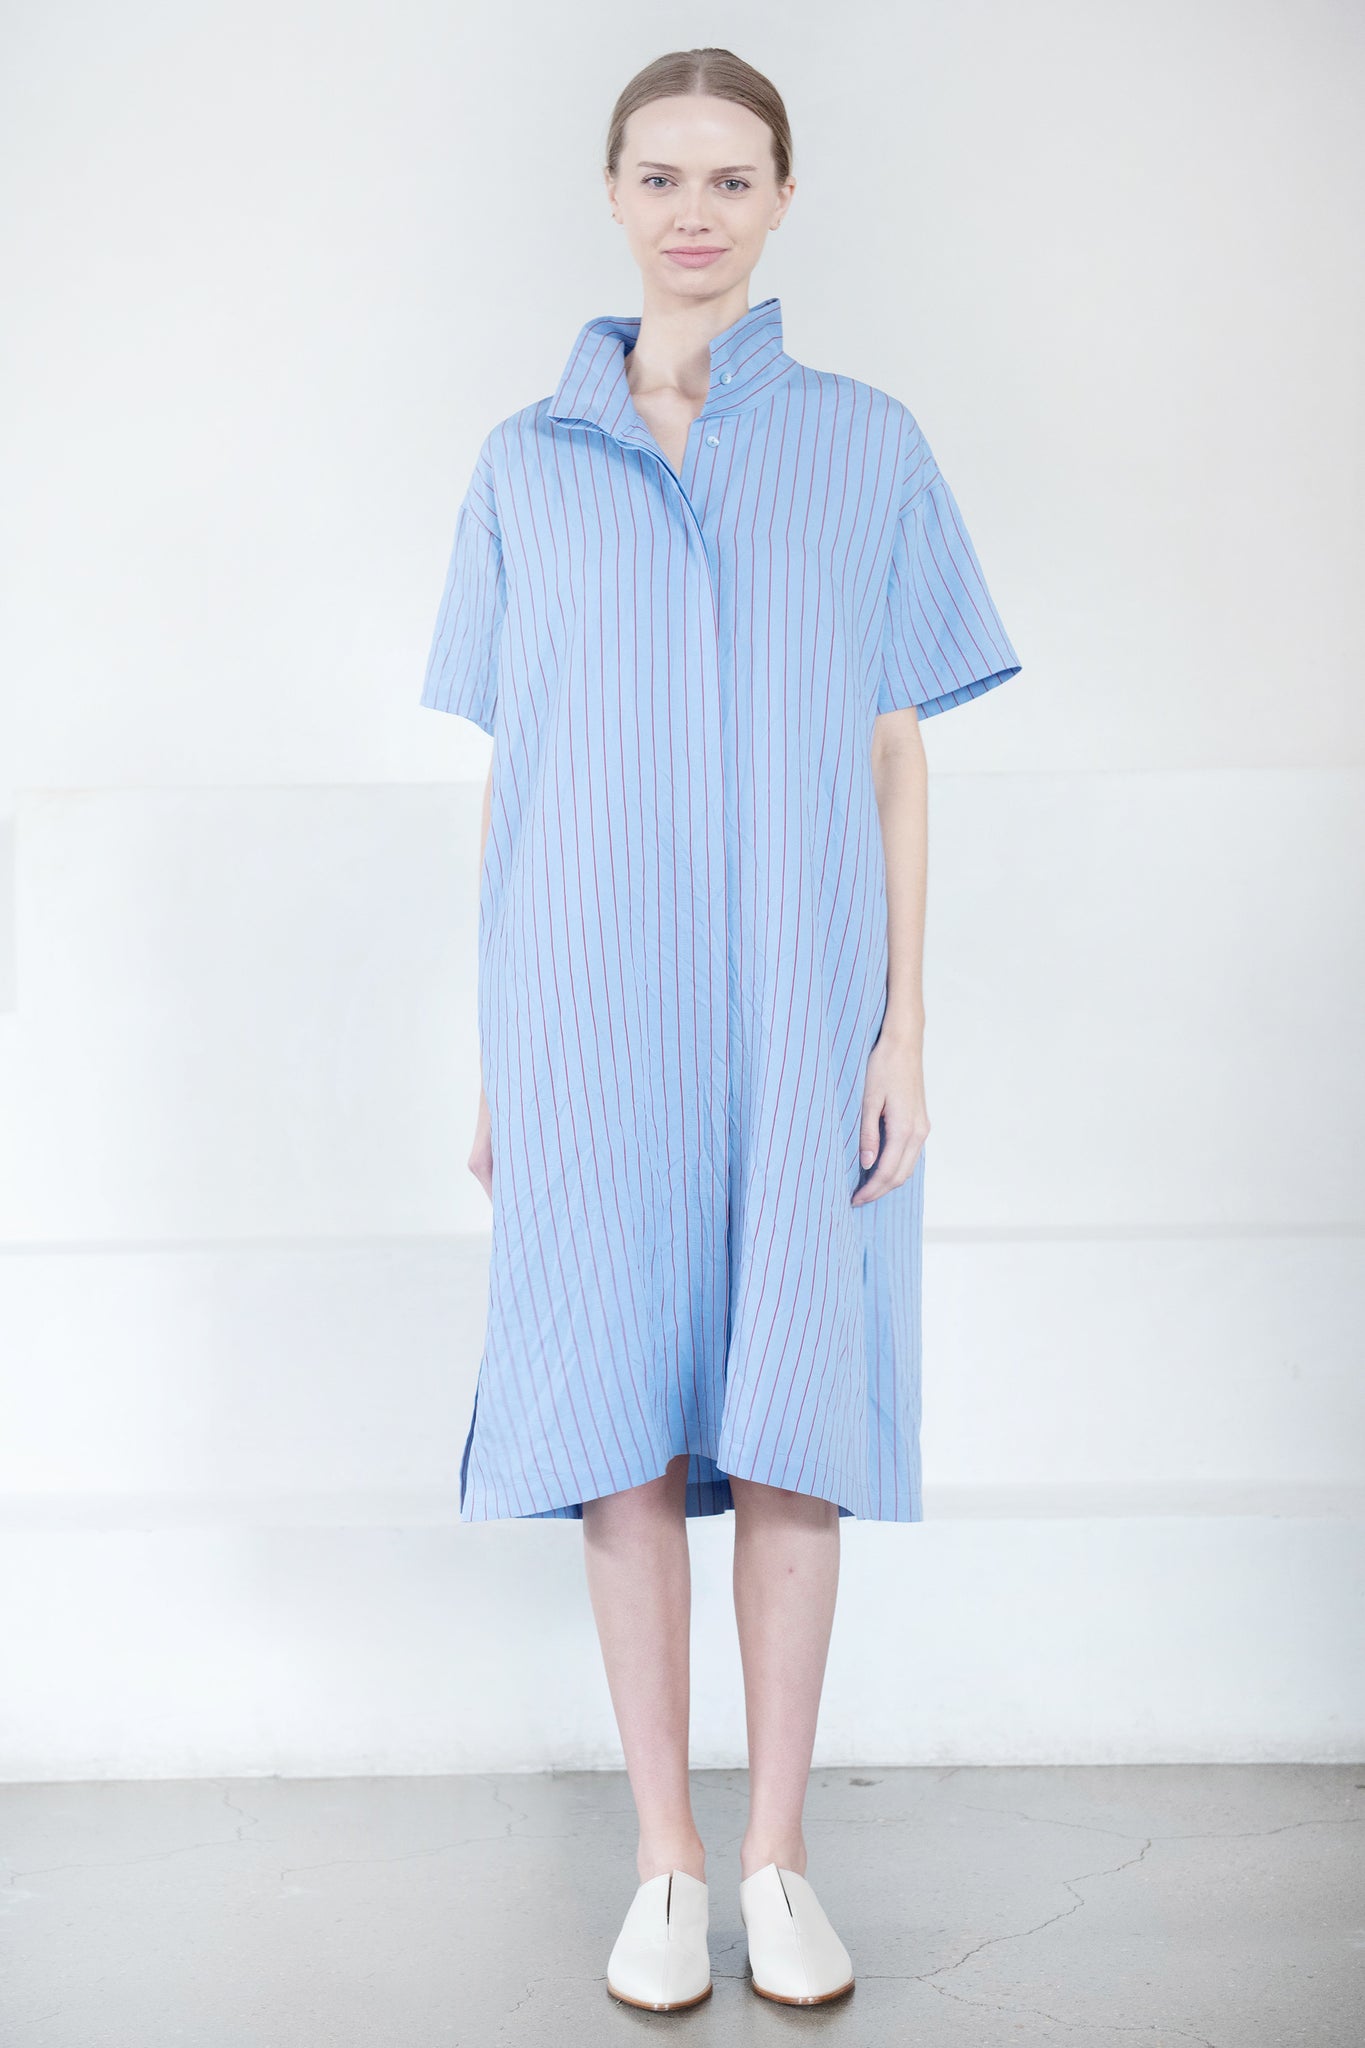 WJ MARTIN - Diane Dress, Blue & Burgundy Stripe